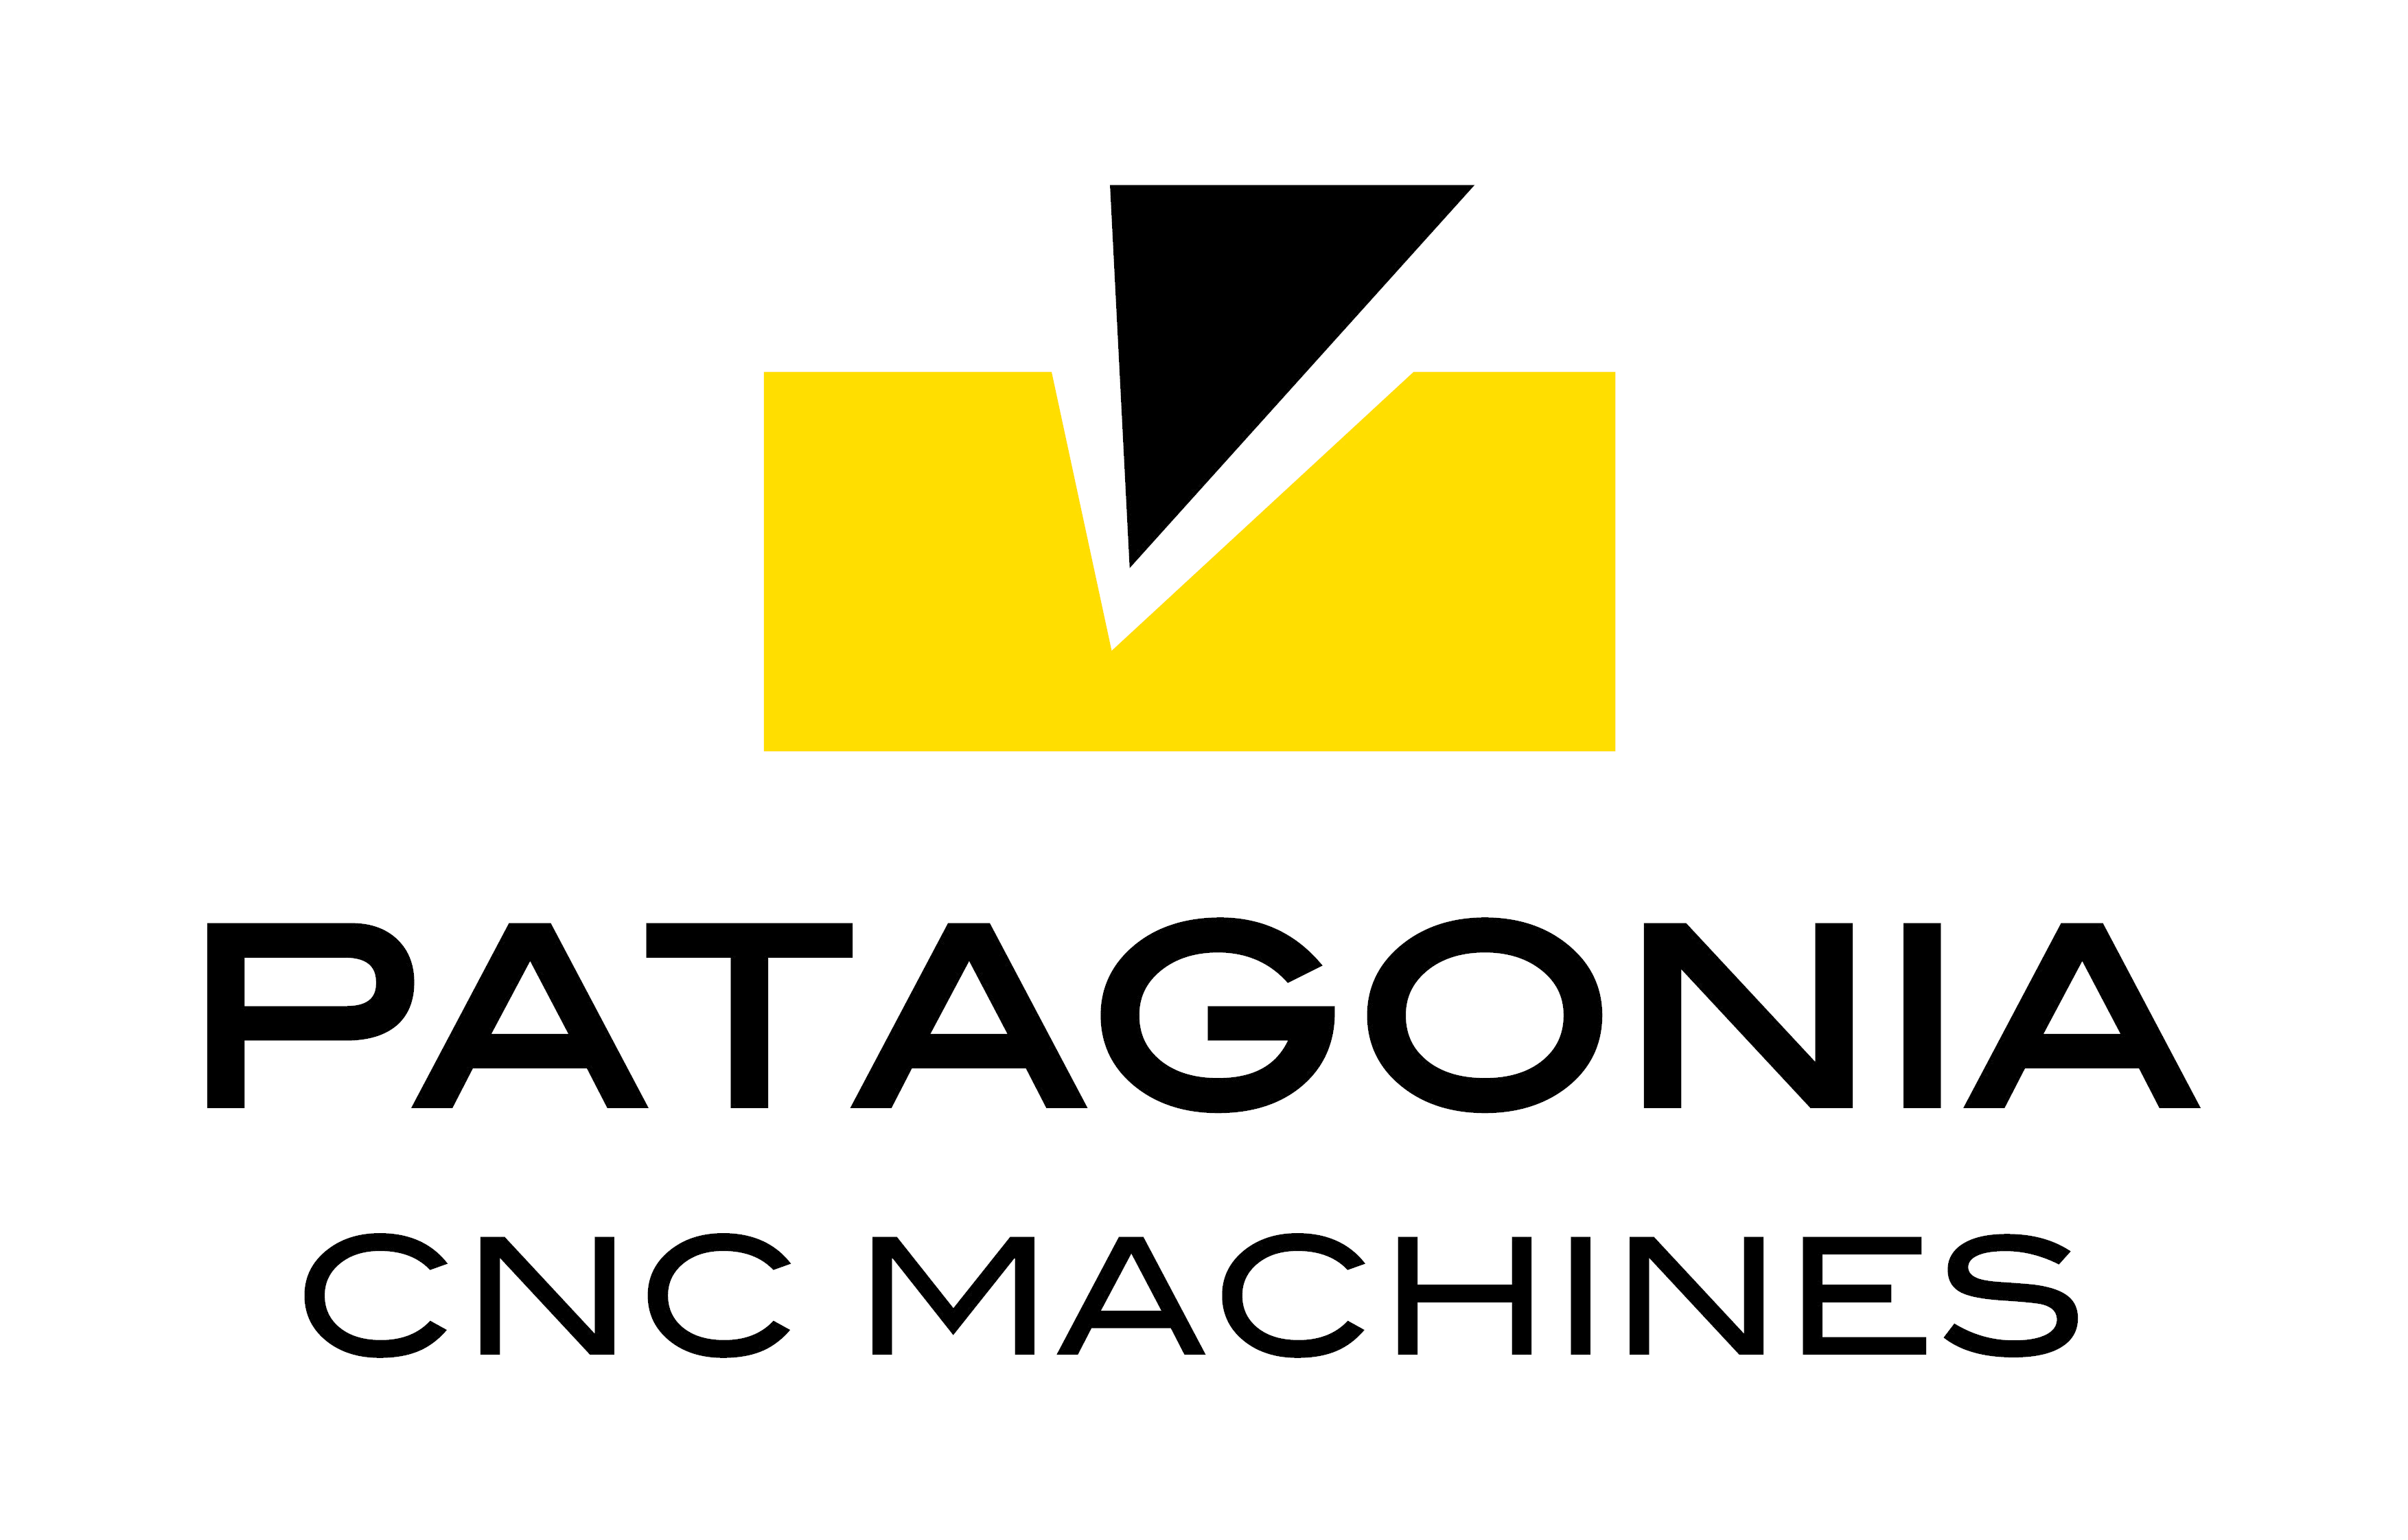 Patagonia CNC Machines – Robótica, Routers, Laser, Automatizaciones